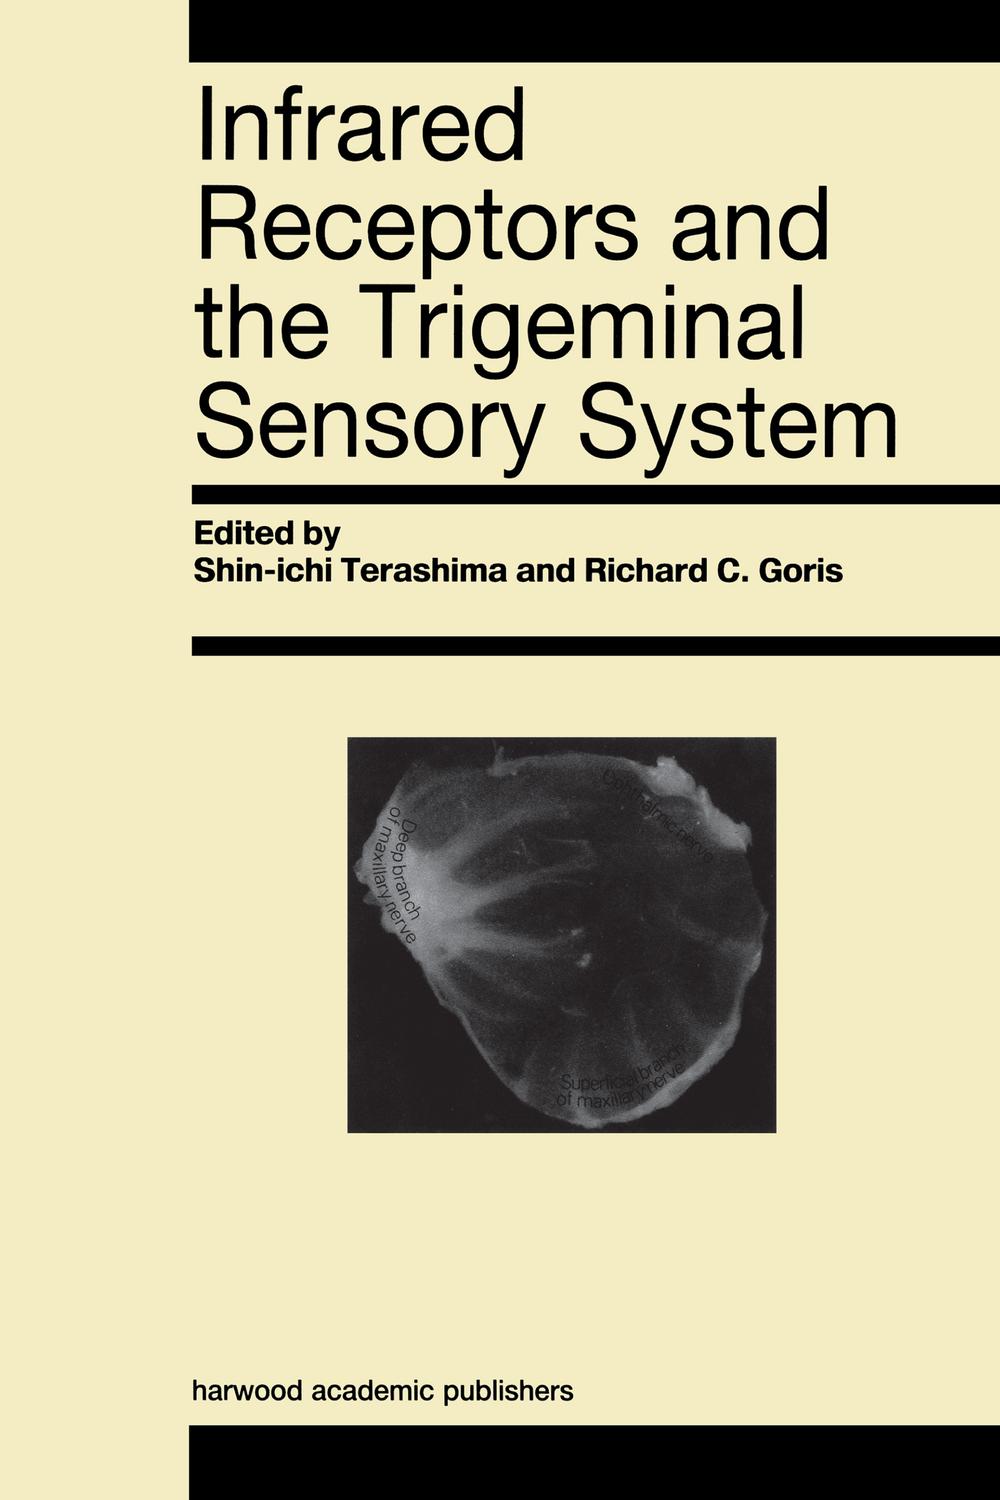 Infrared Receptors and the Trigeminal Sensory System - S Terashima, R. C. Goris